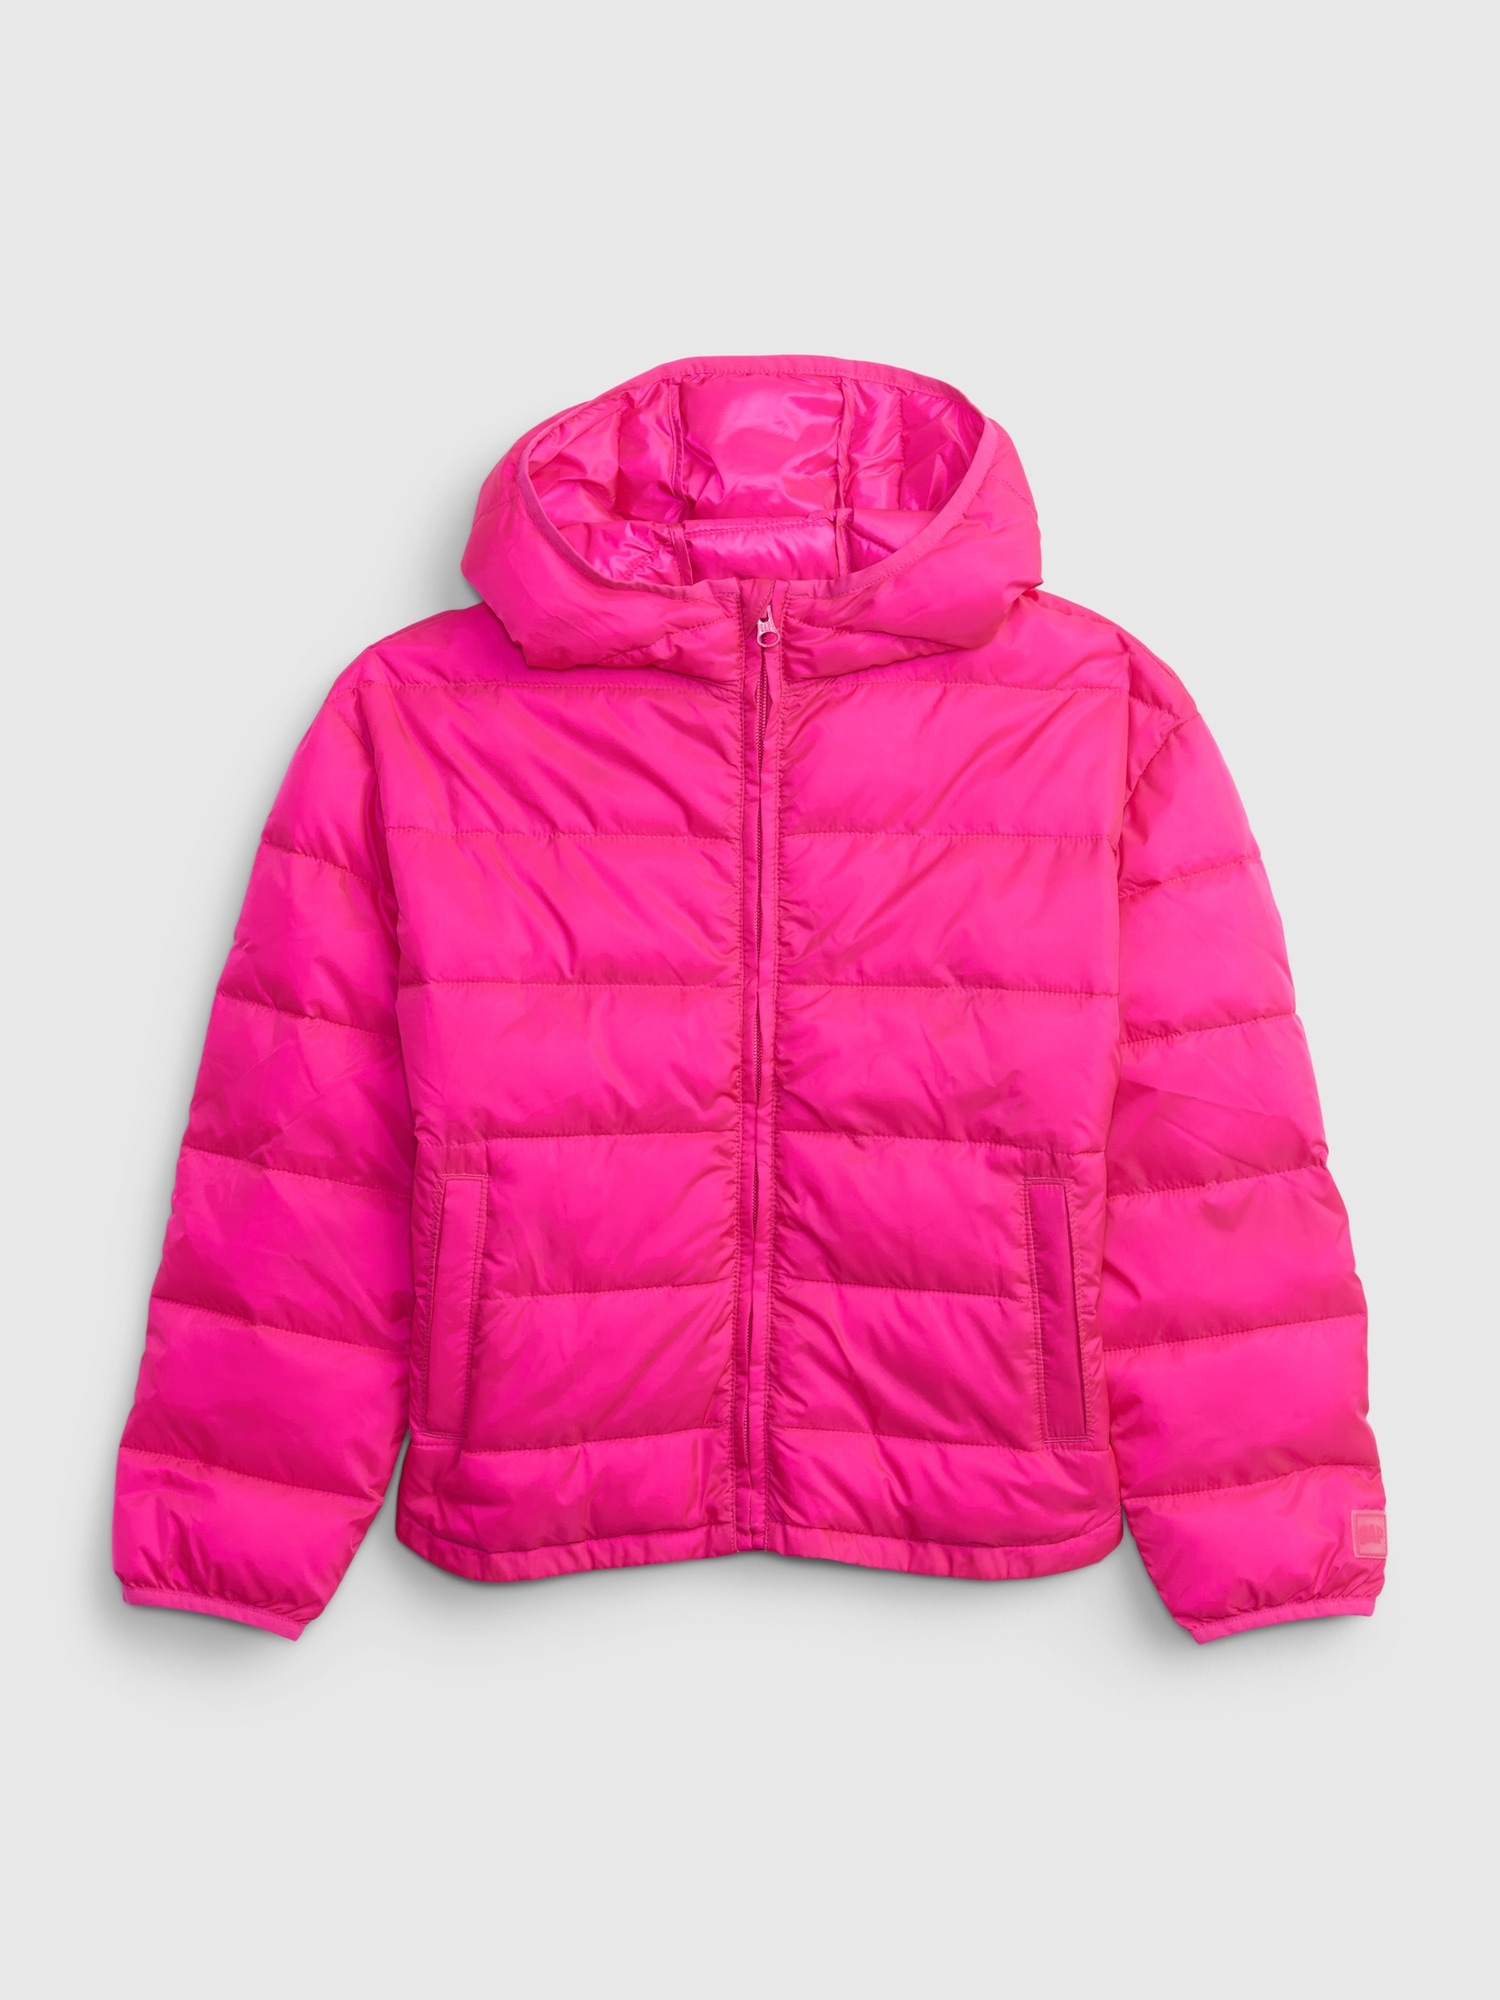 Gap Kids 100% Recycled Lightweight Puffer Jacket pink - 426484012